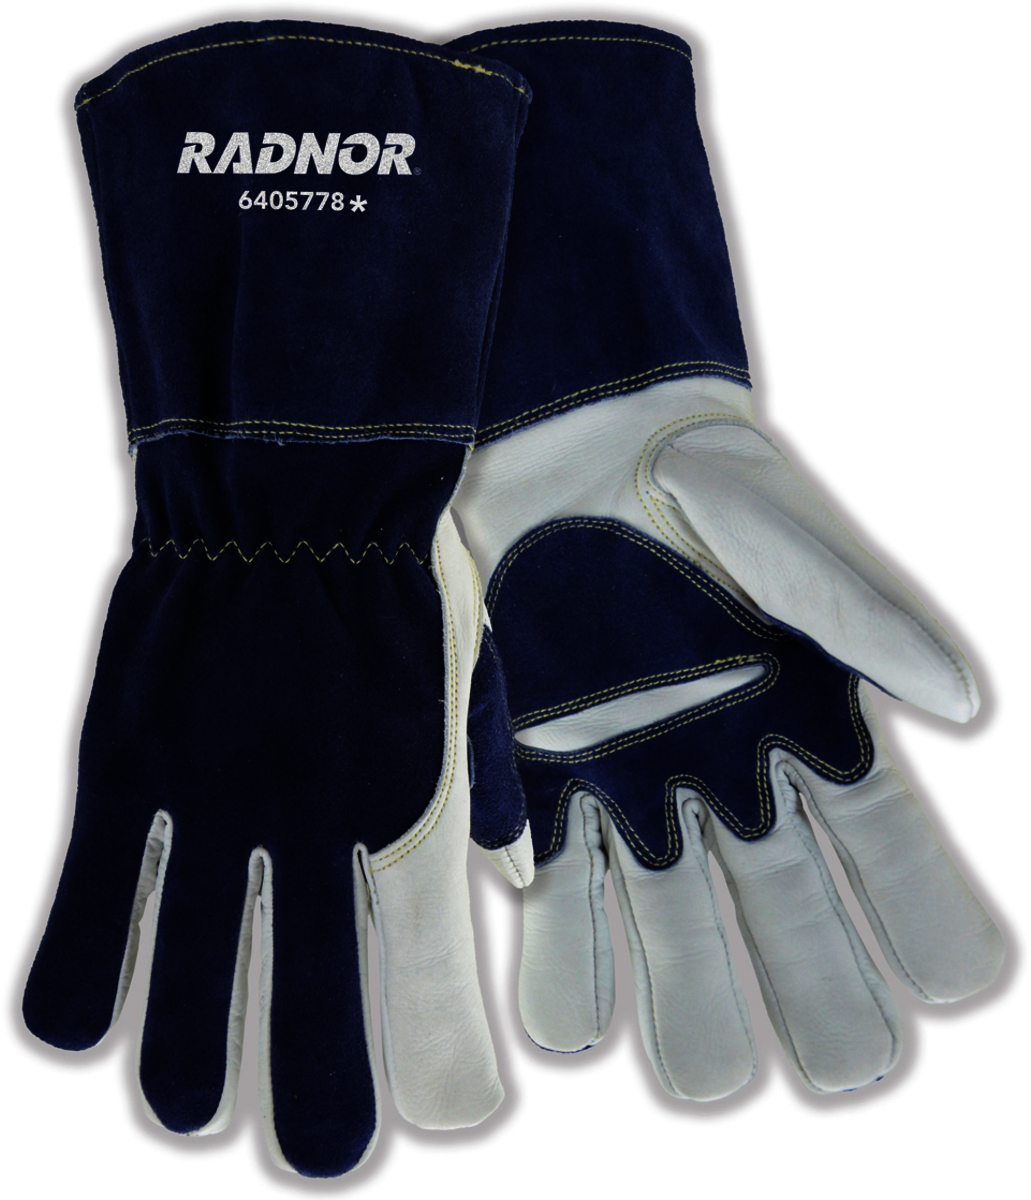 Airgas - Lined Welders Gloves RAD64057782 MIG White Cowhide 3/4\